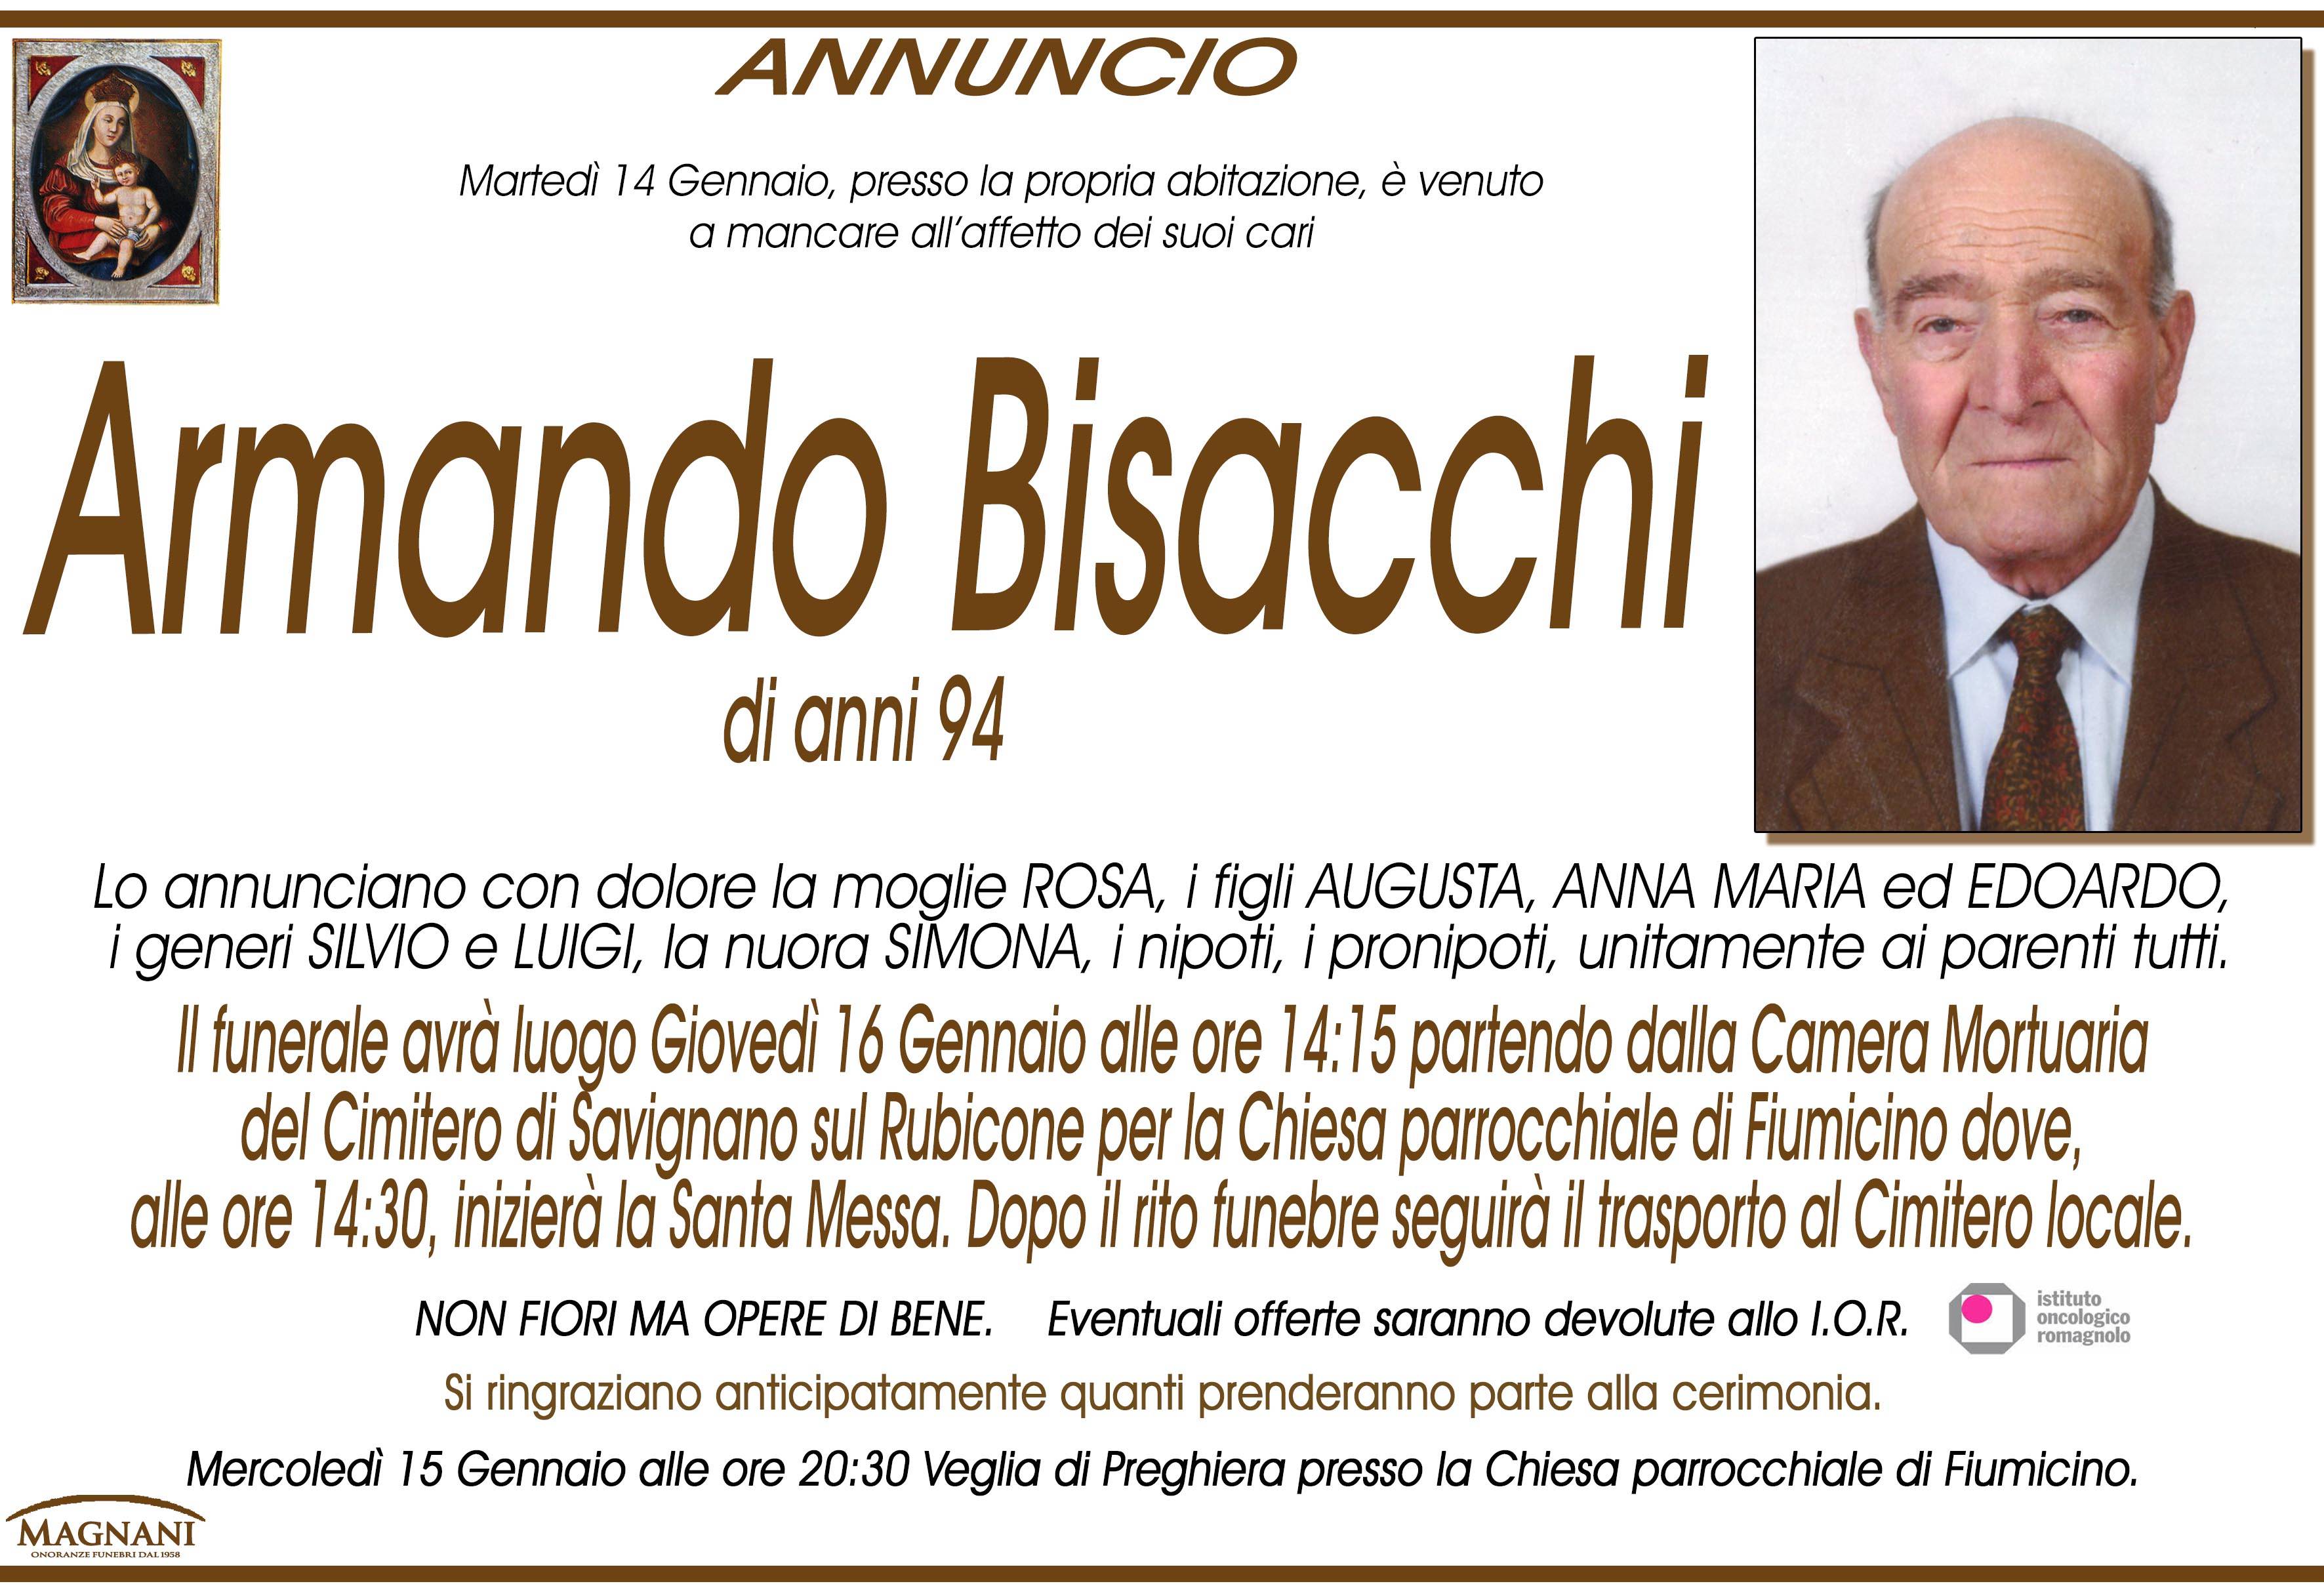 Armando Bisacchi